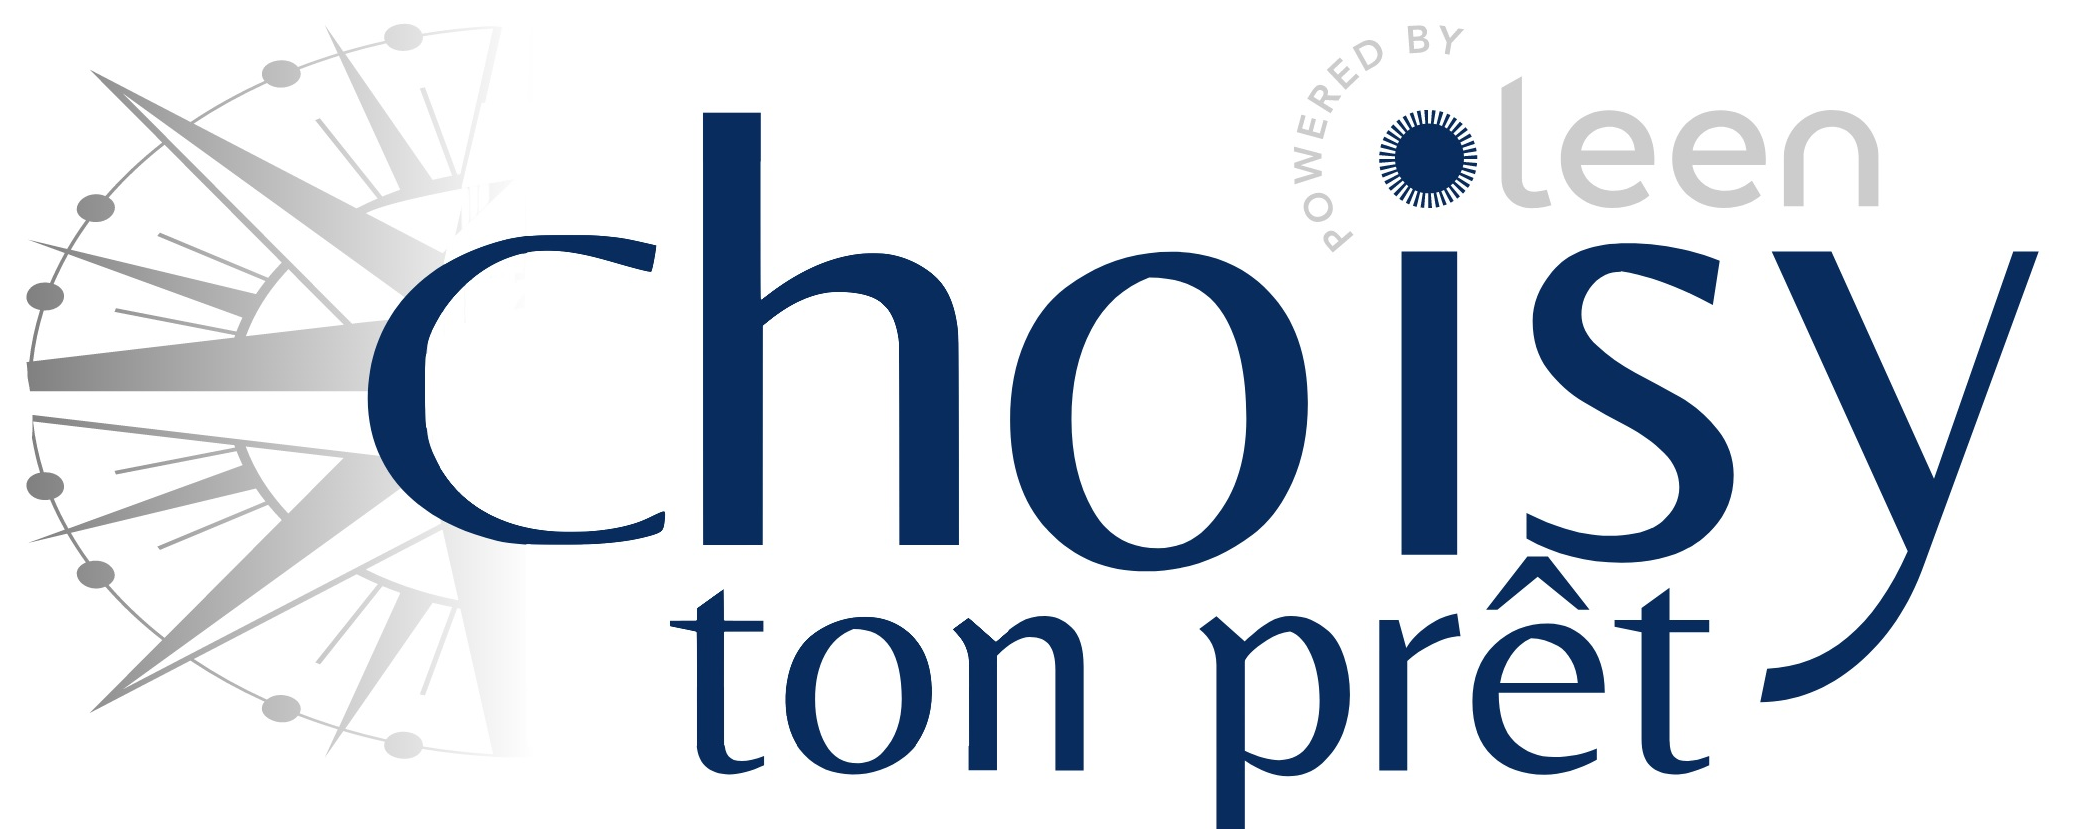 Logo Choisy ton pret